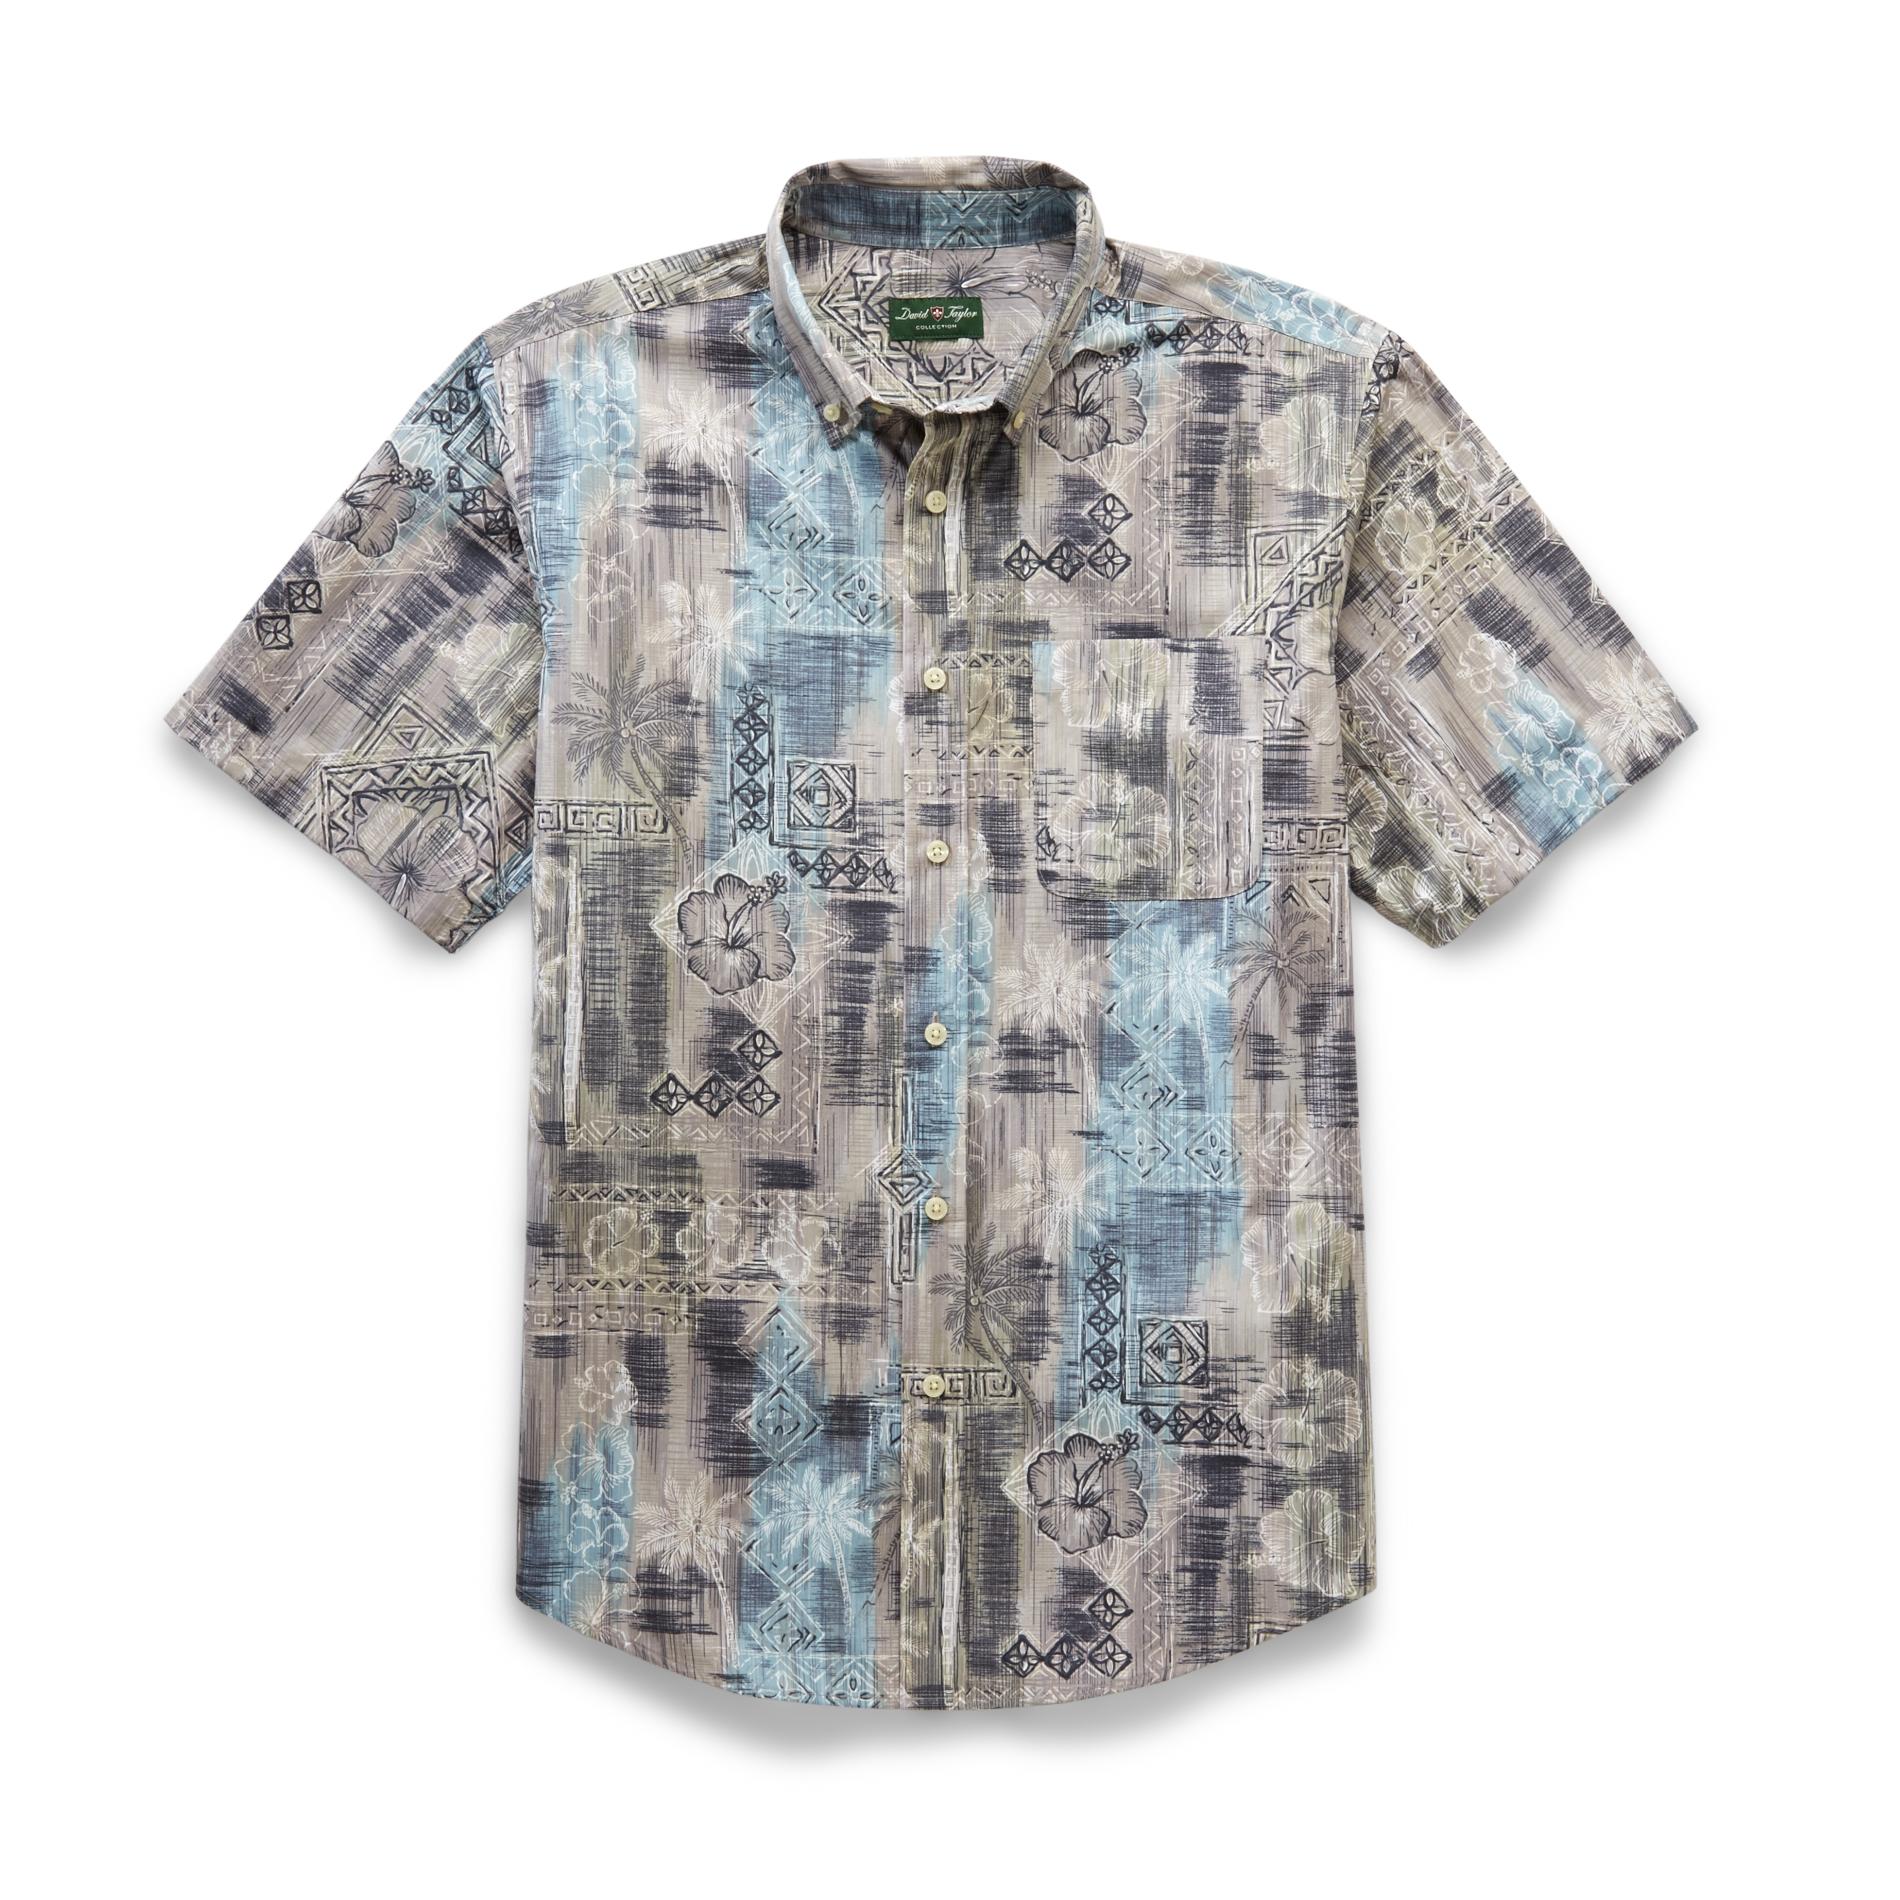 David Taylor Collection Men's Short-Sleeve Linen Shirt - Tropical Print